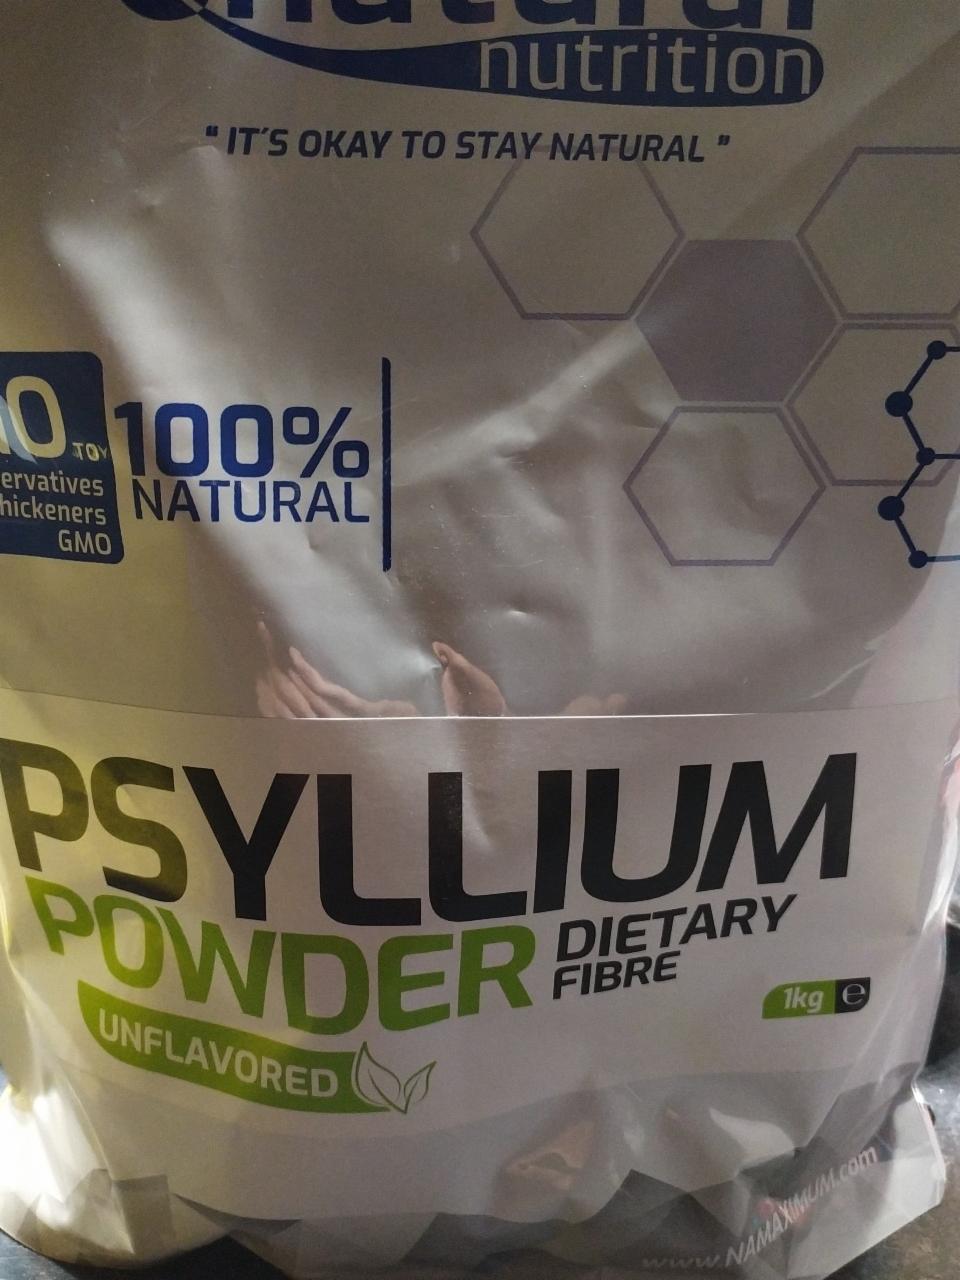 Fotografie - Psyllium powder dietary fibre Unflavored Natural Nutrition